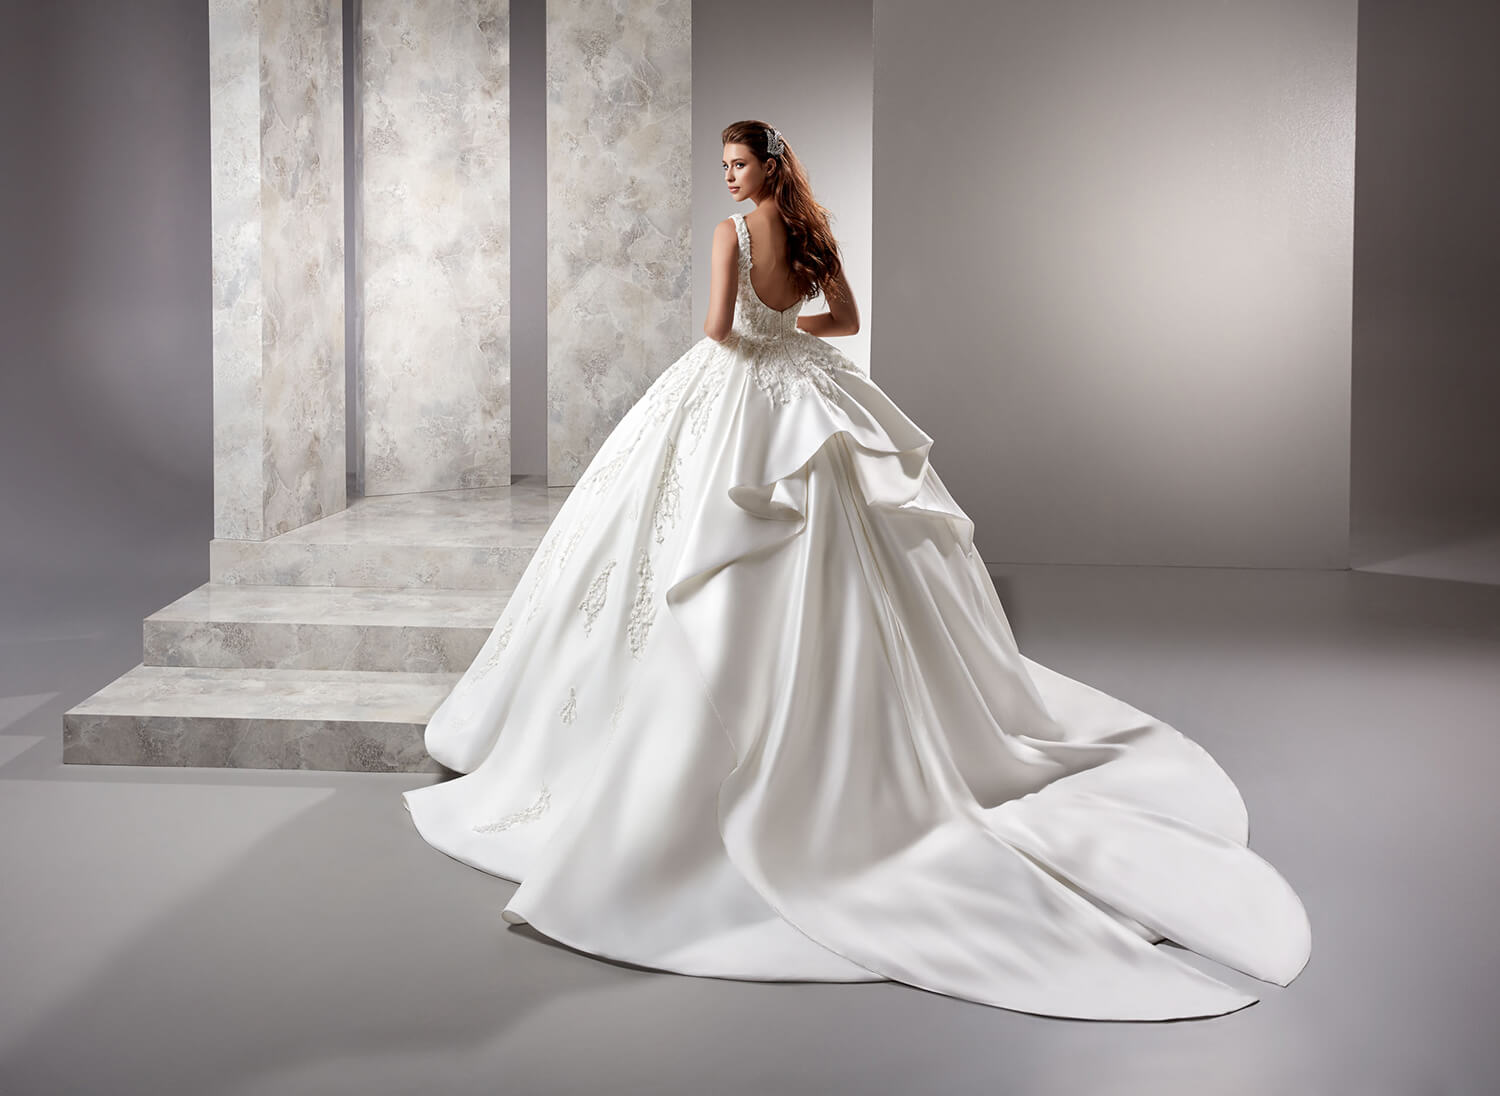 U-Neck Low-Cut Back Princess Wedding Dress with Tail